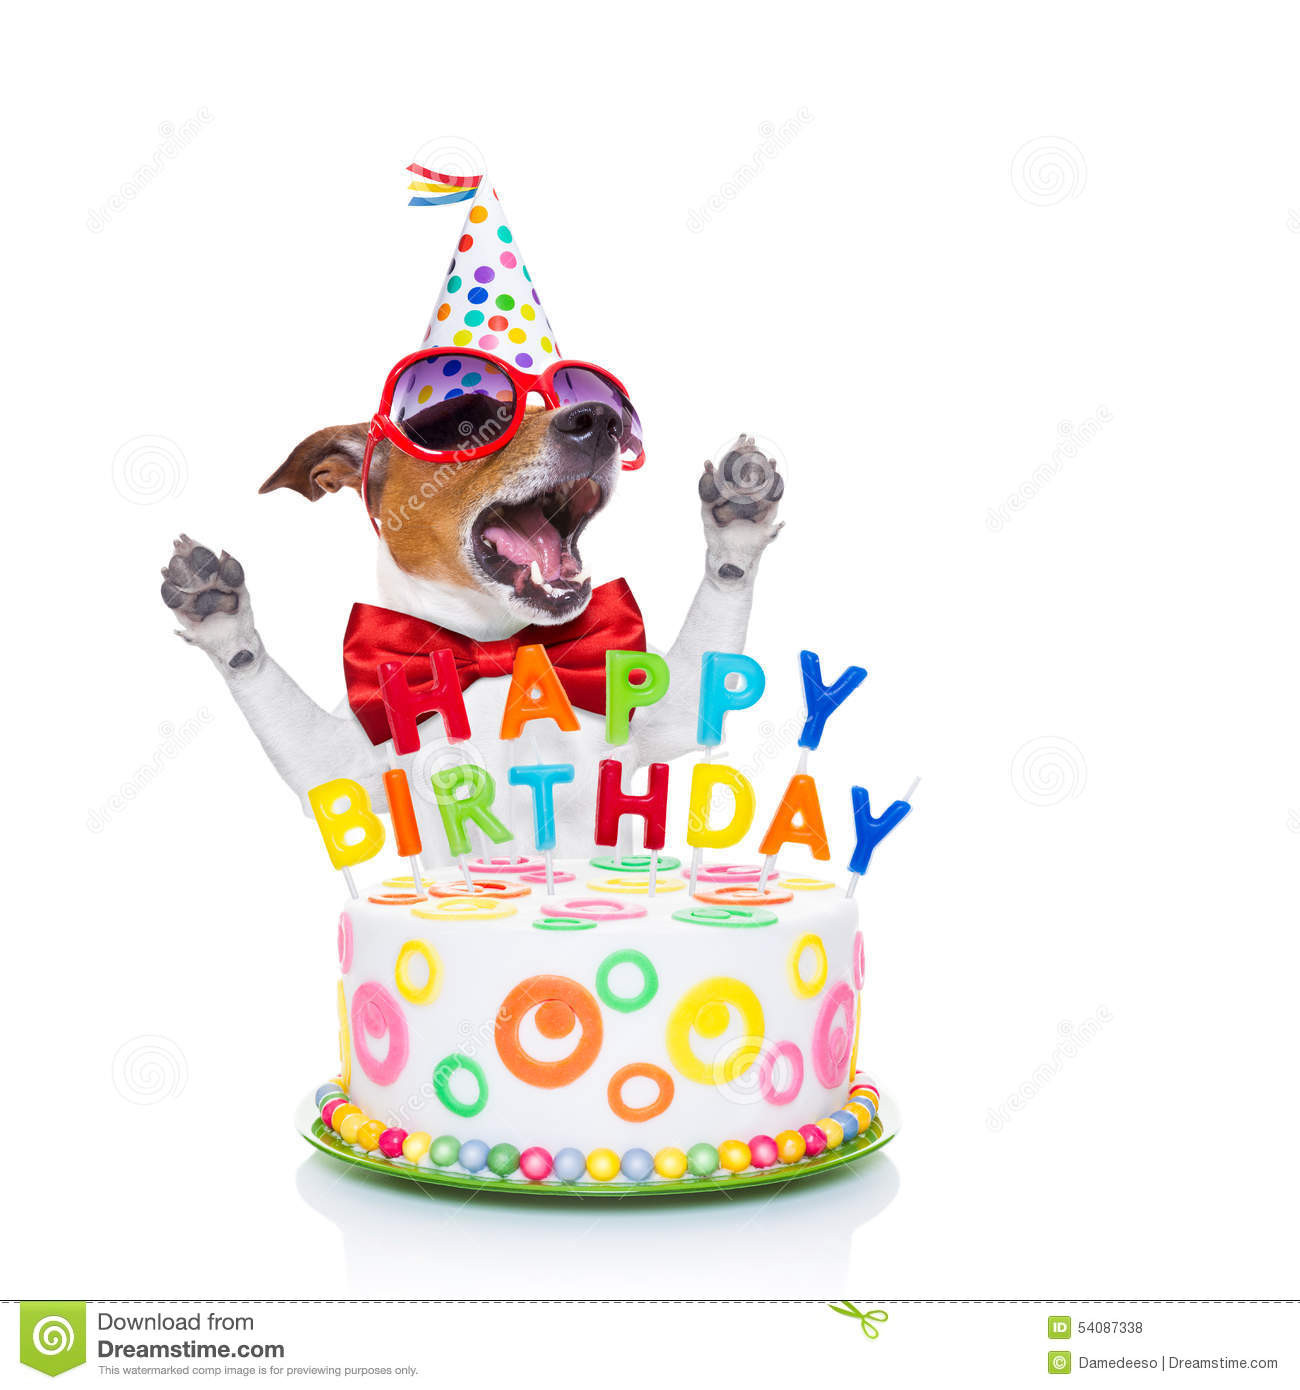 Happy Birthday Cake Funny
 Happy birthday dog singing stock photo Image of cake